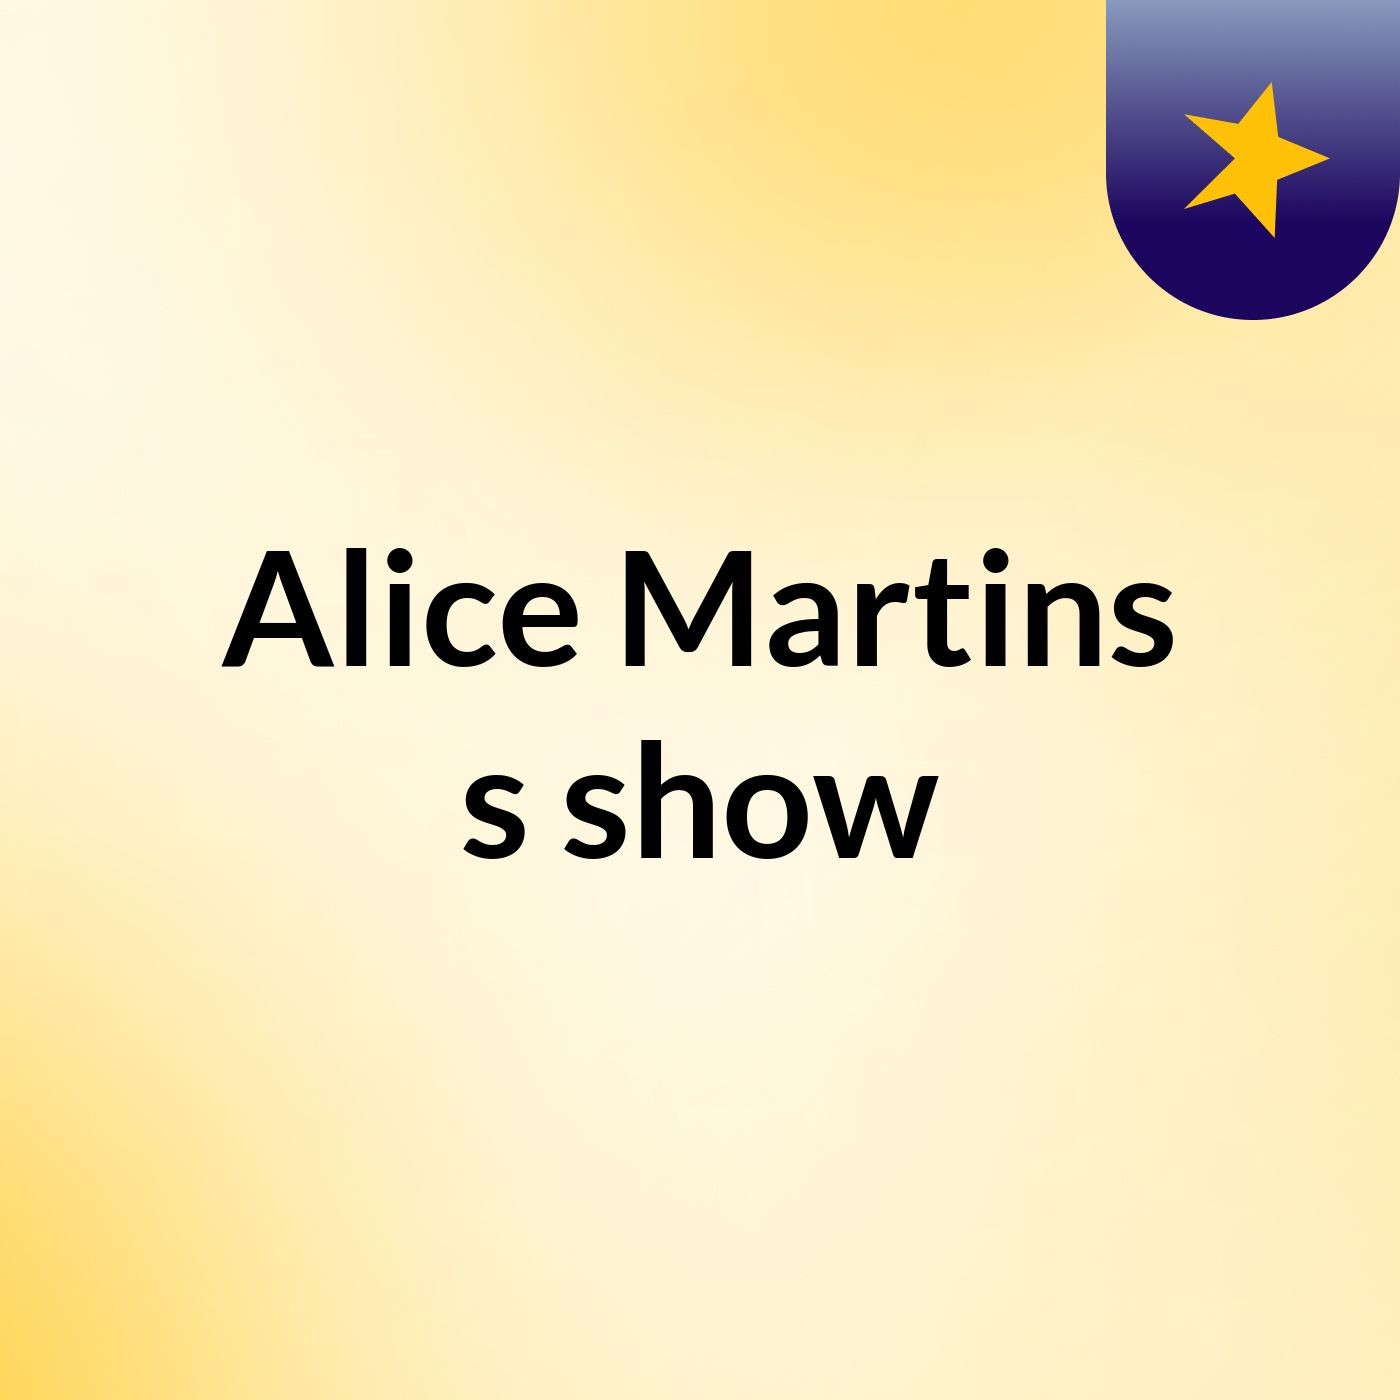 Alice Martins's show